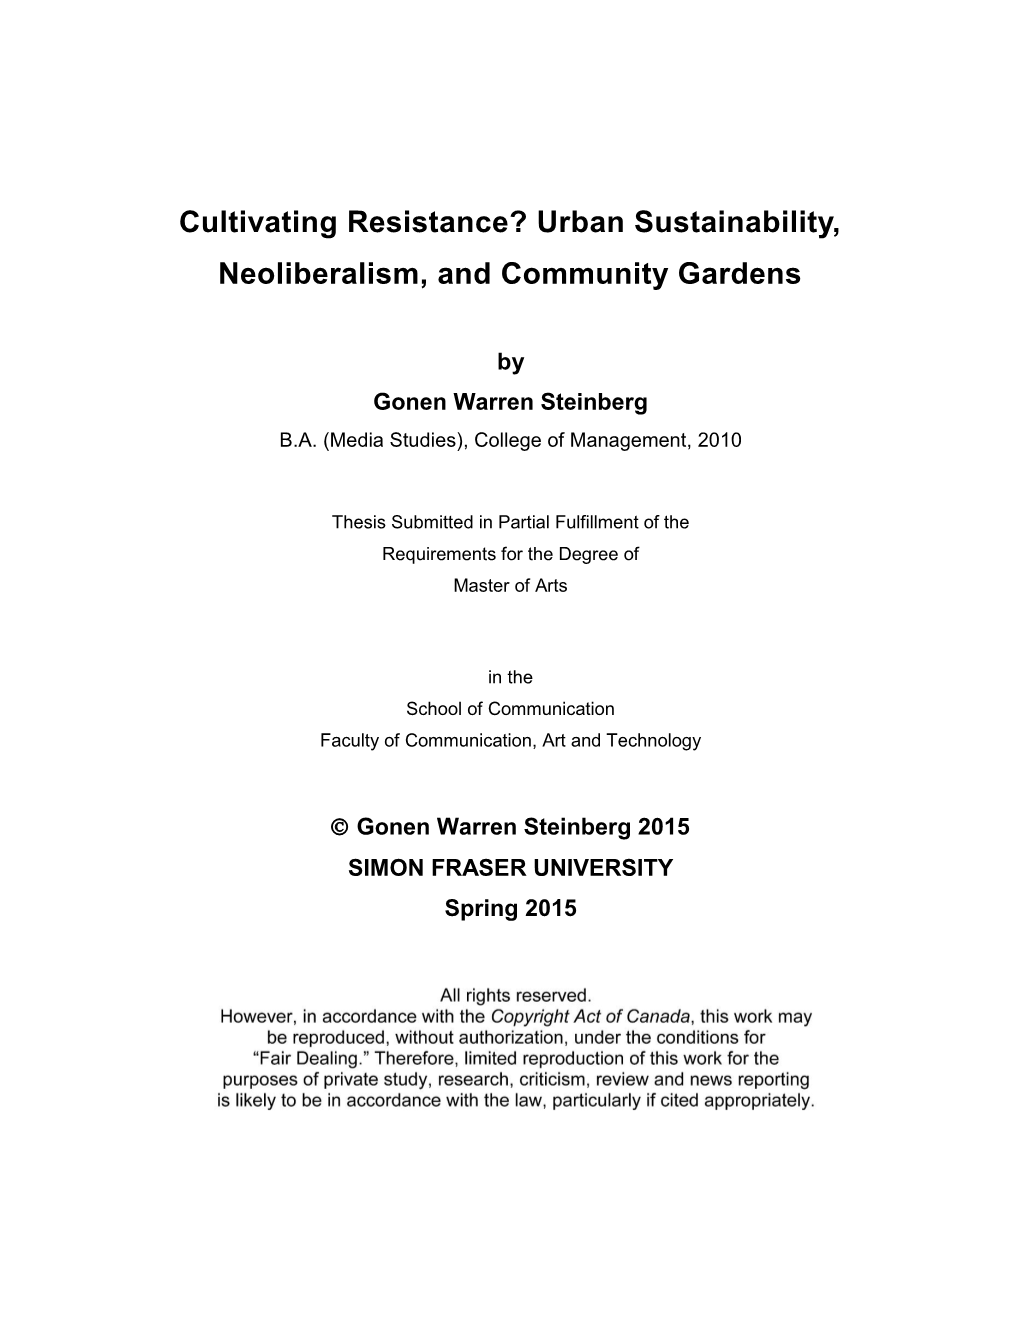 Urban Sustainability, Neoliberalism, and Community Gardens